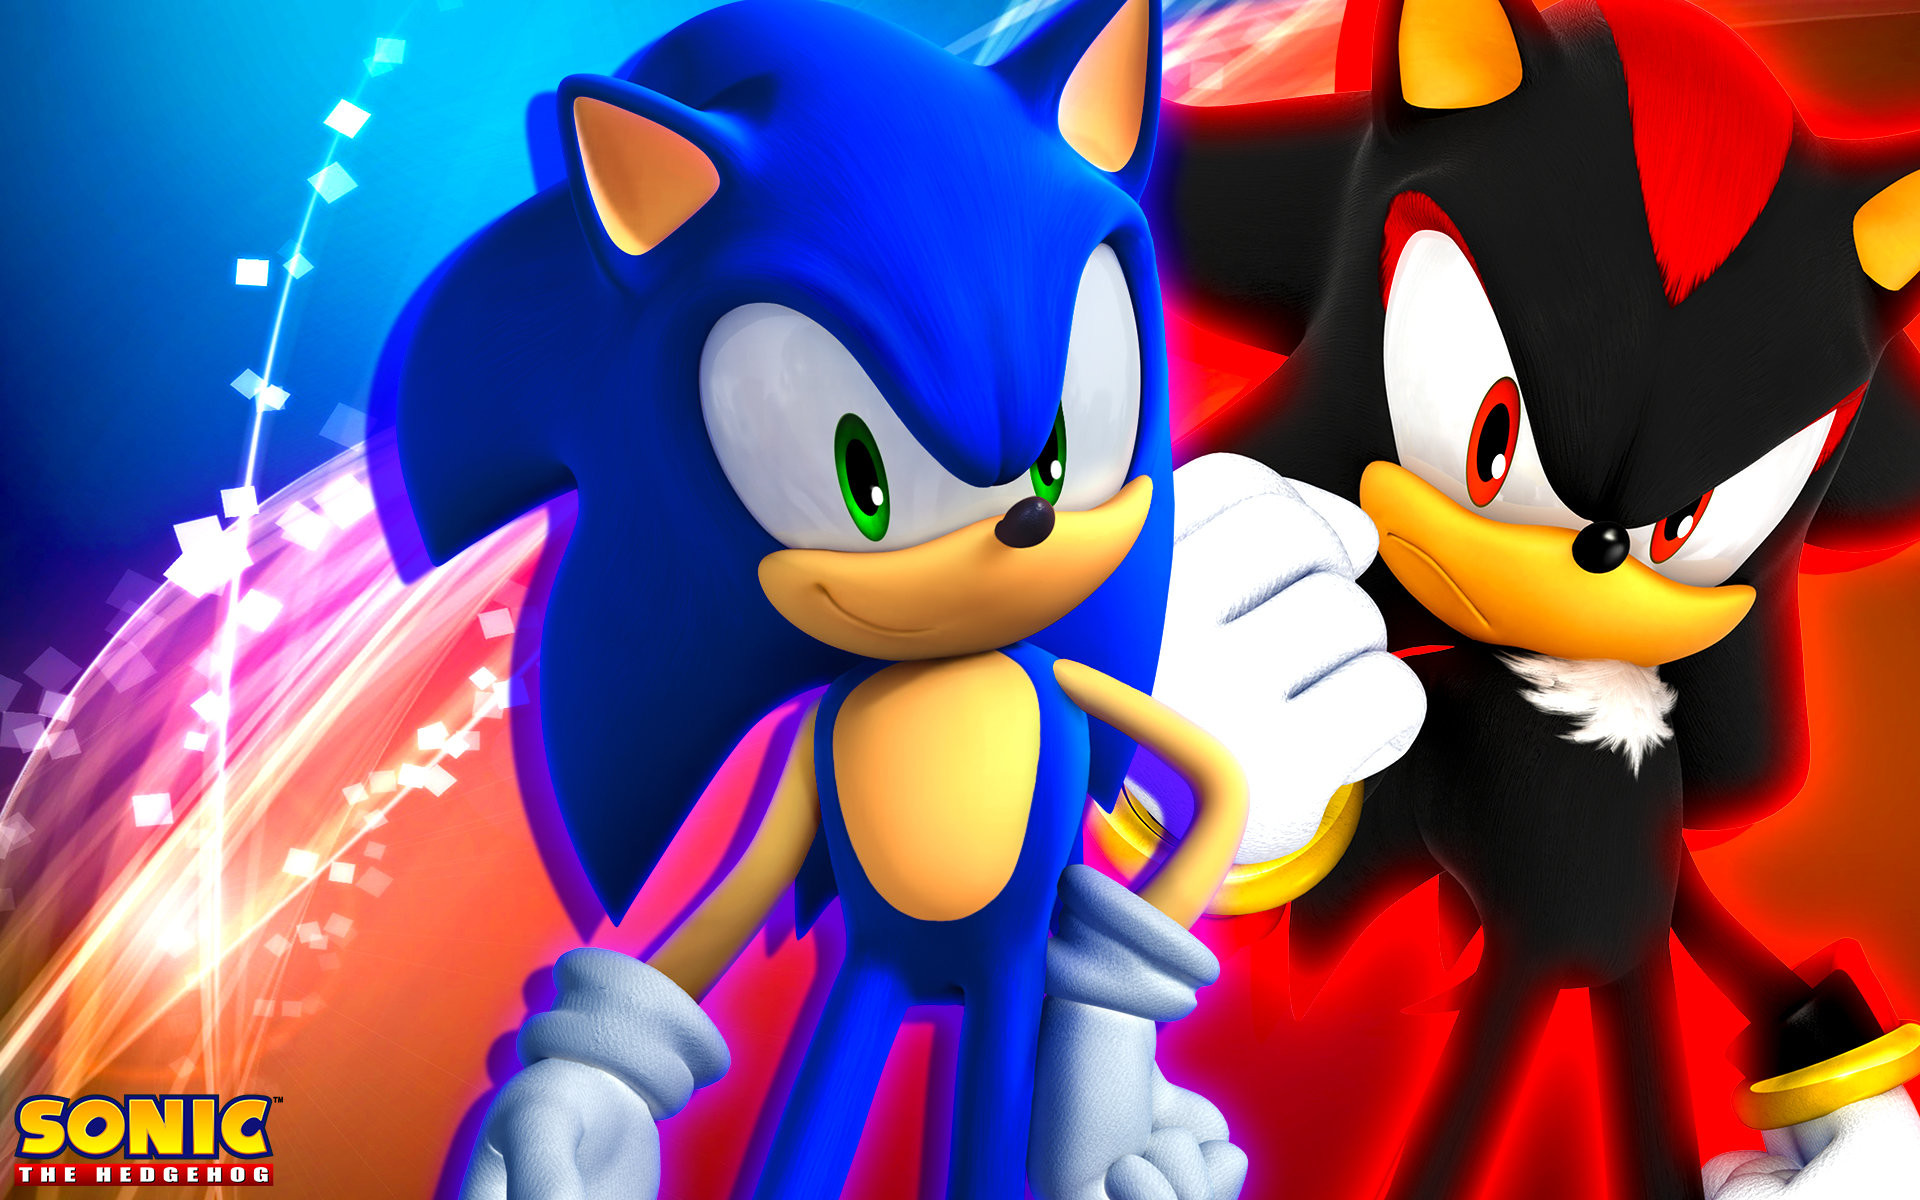 Free download Sonic Desktop Backgrounds 5.